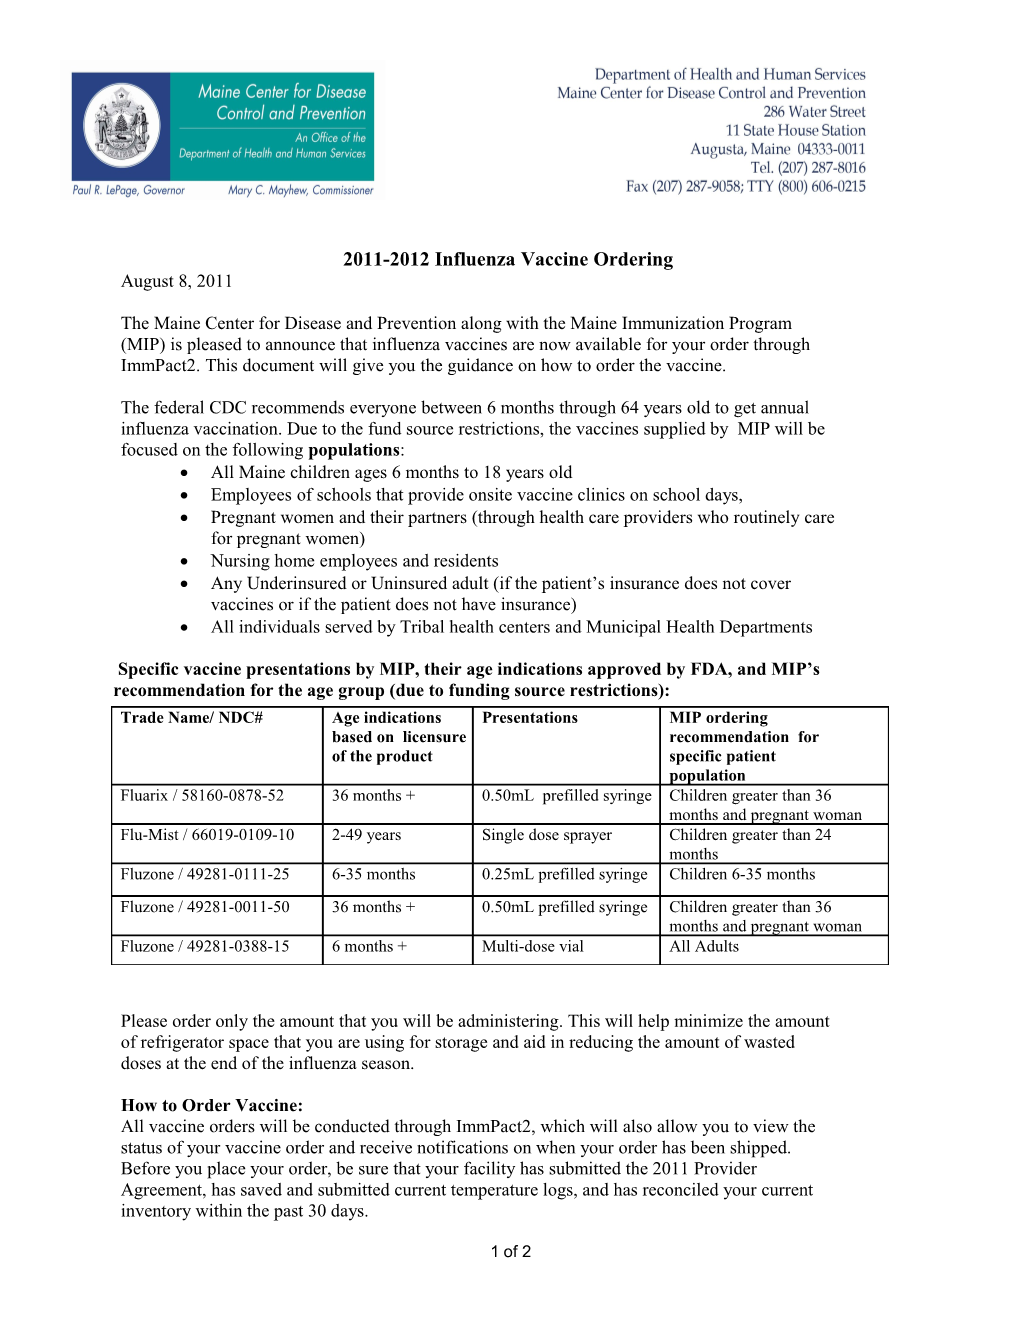 2011-2012 Influenza Availability Information